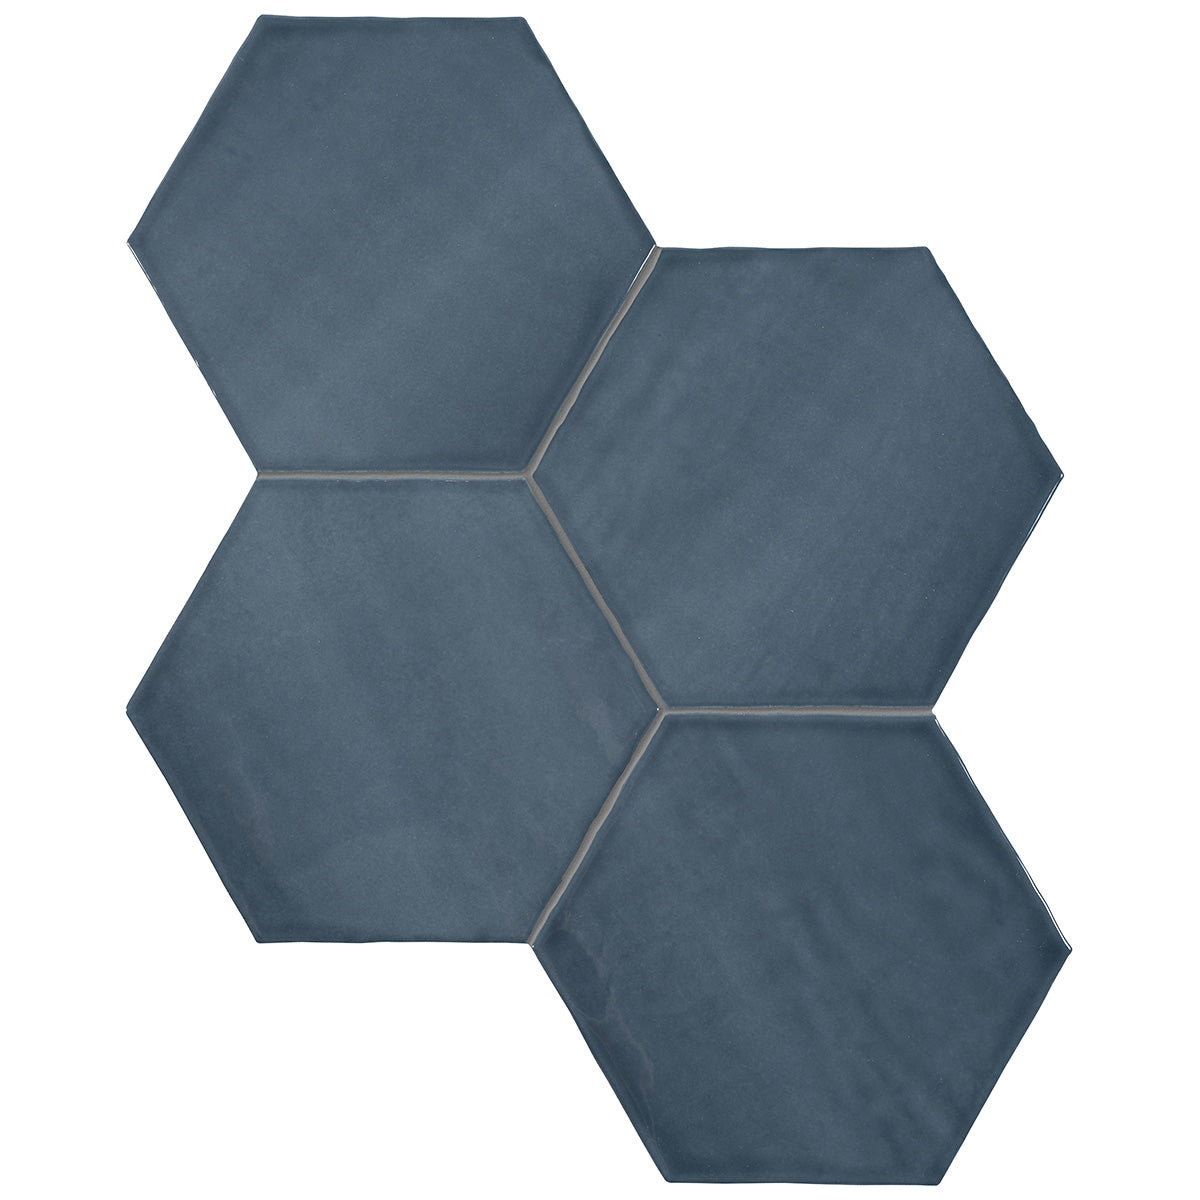 Anatolia - Teramoda 6 in. Hexagon Glazed Ceramic Wall Tile - Ink Glossy